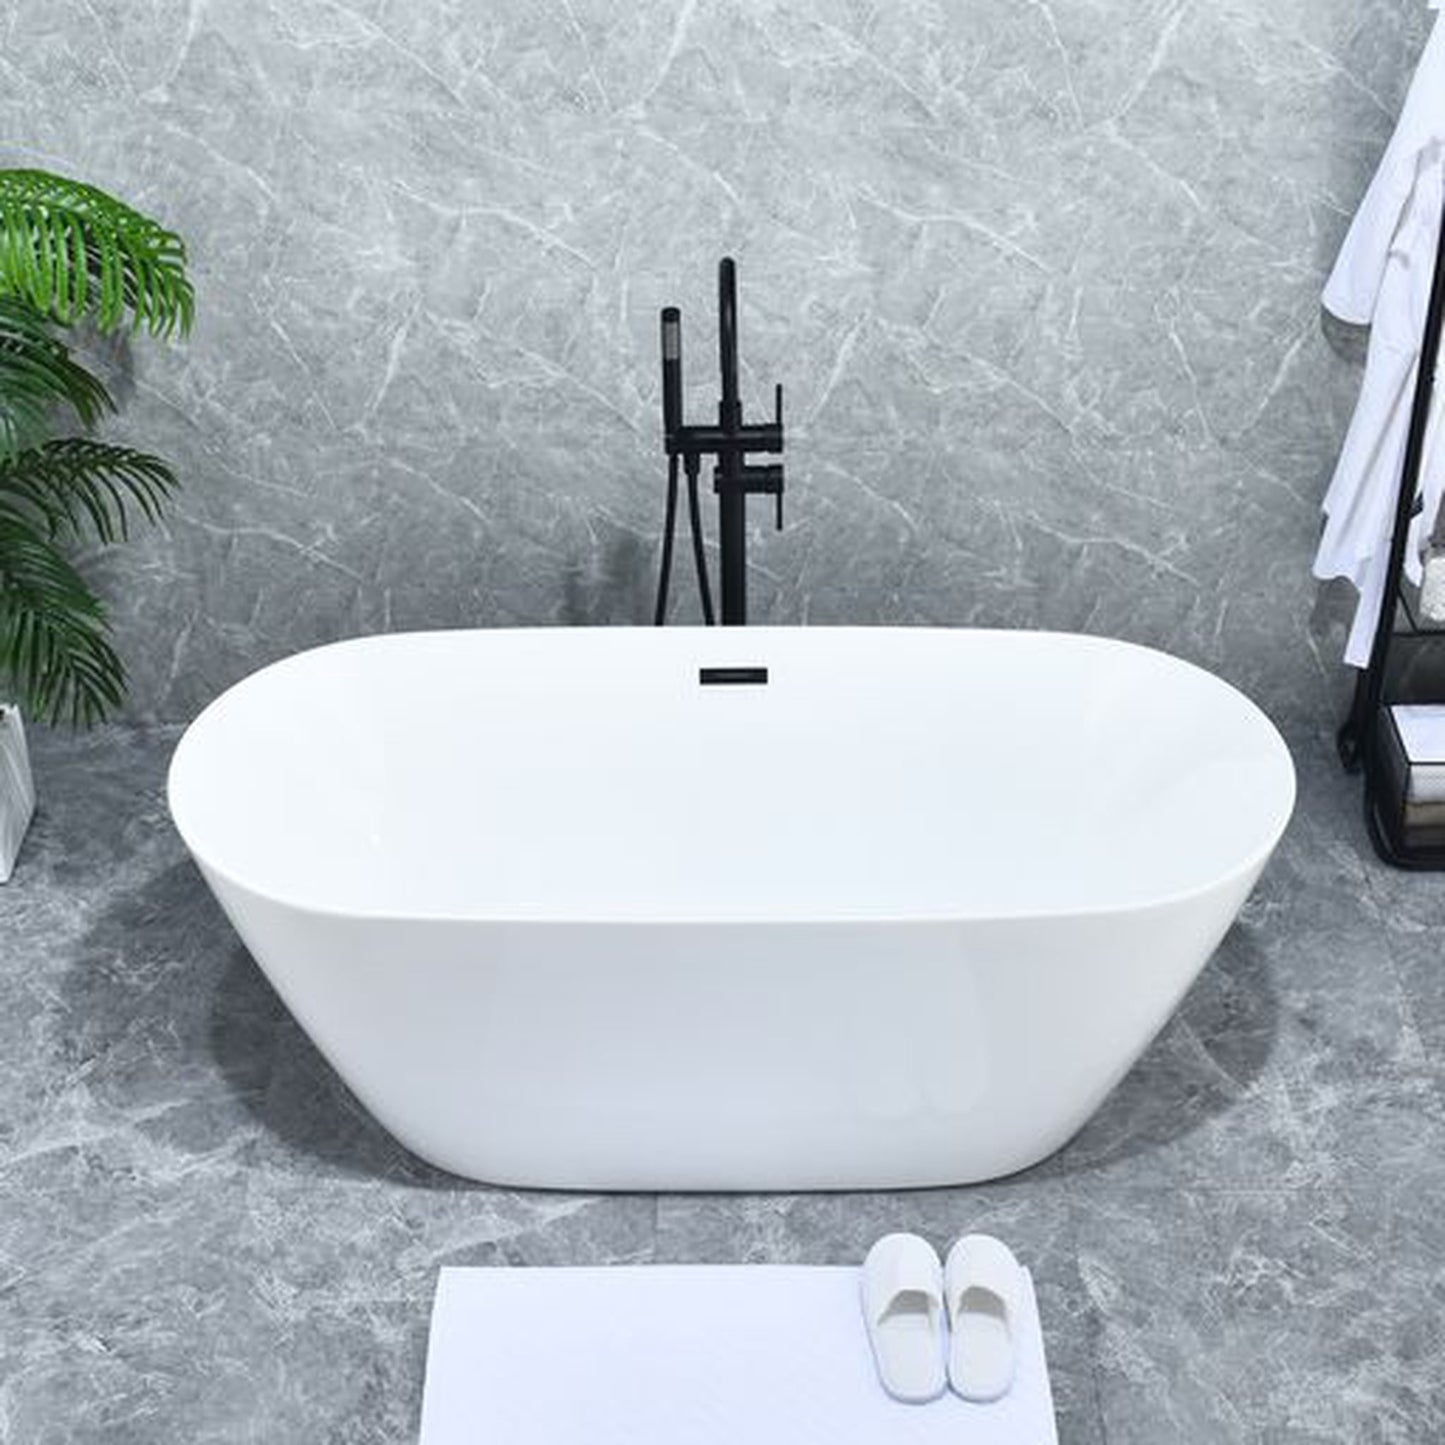 Altair Assens Matte Black Double Lever Handle Freestanding Bathtub Faucet With Handshower